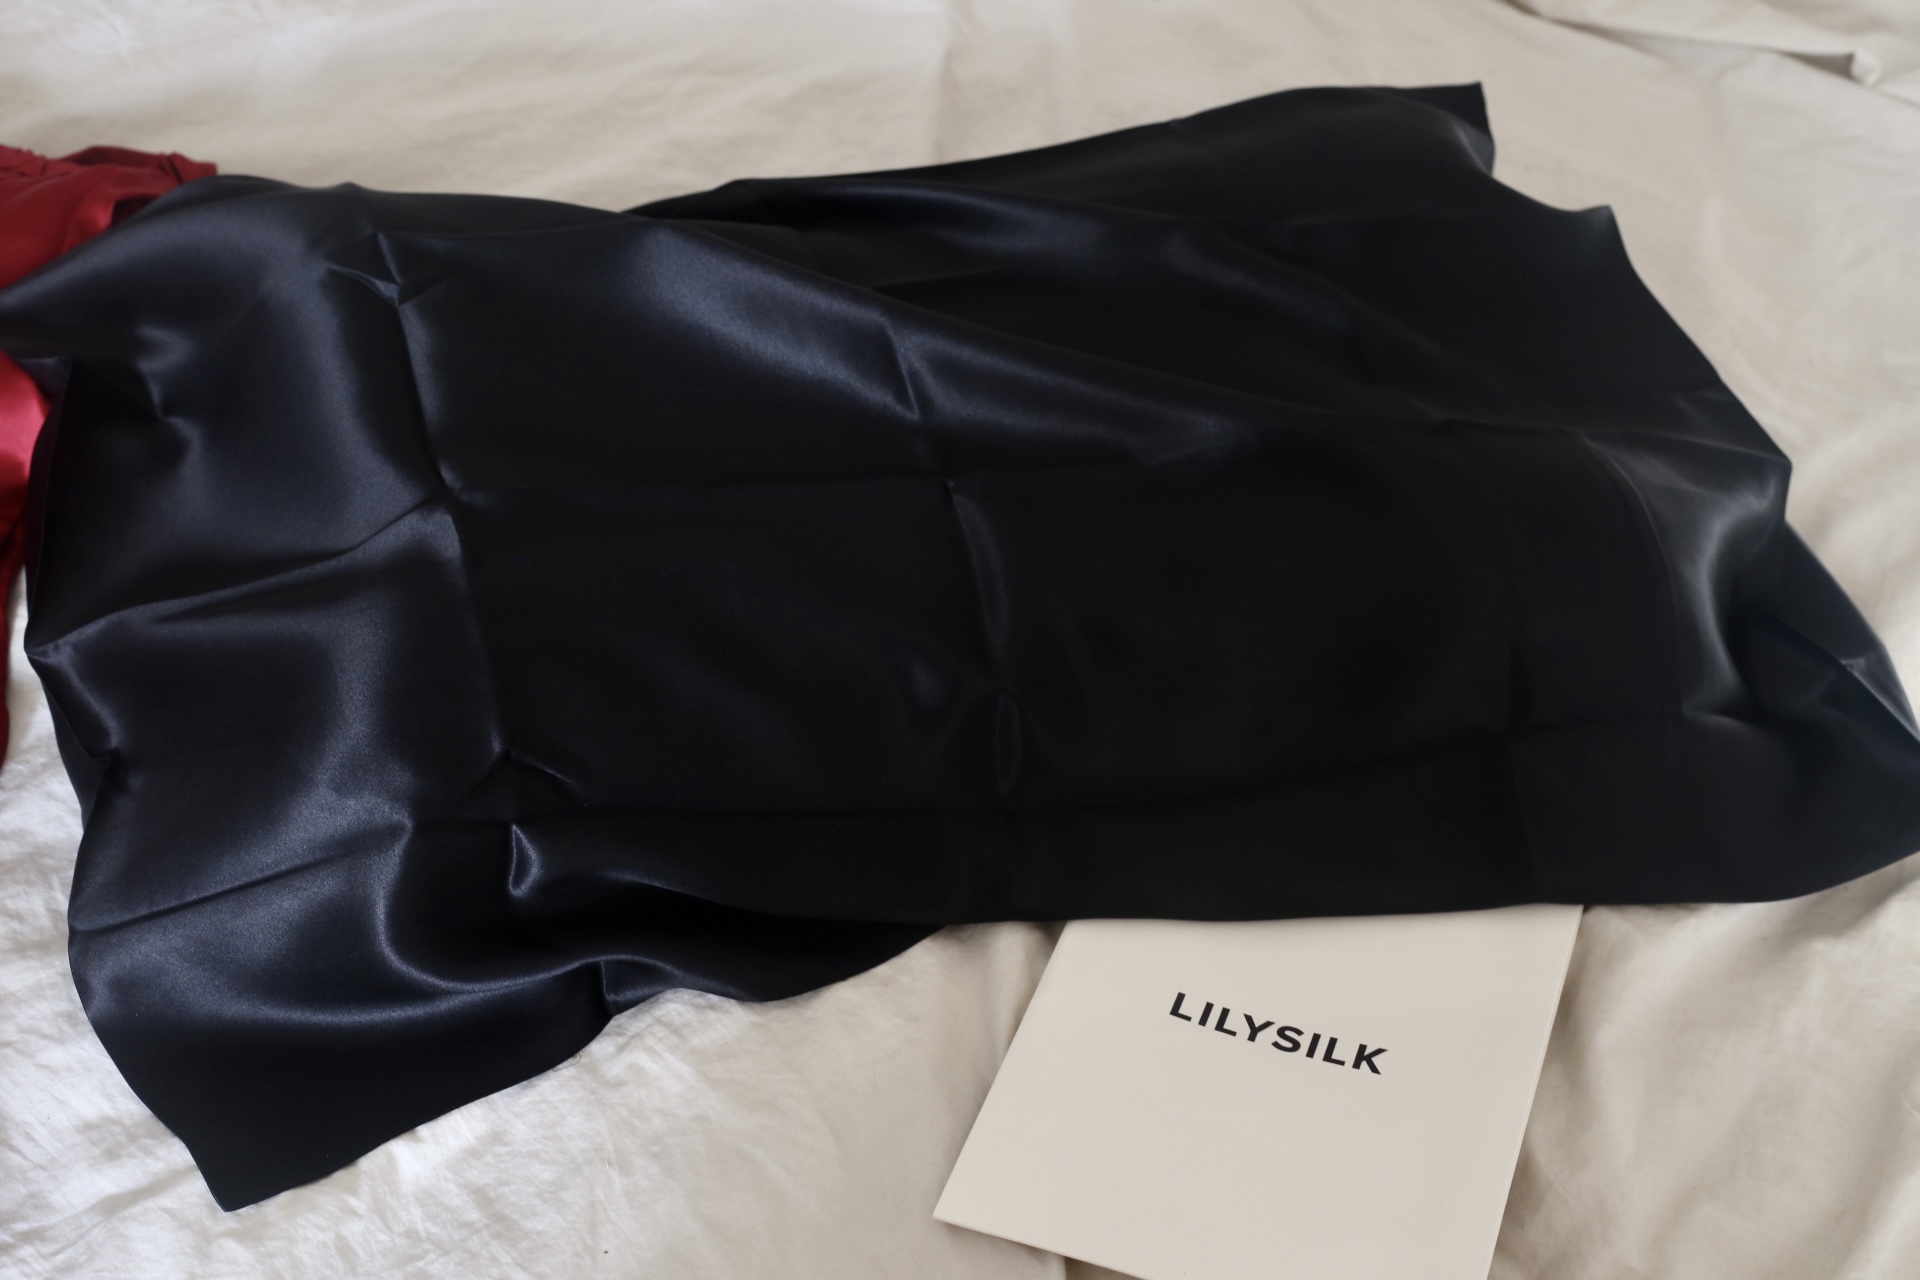 Lilysilk pillowcase